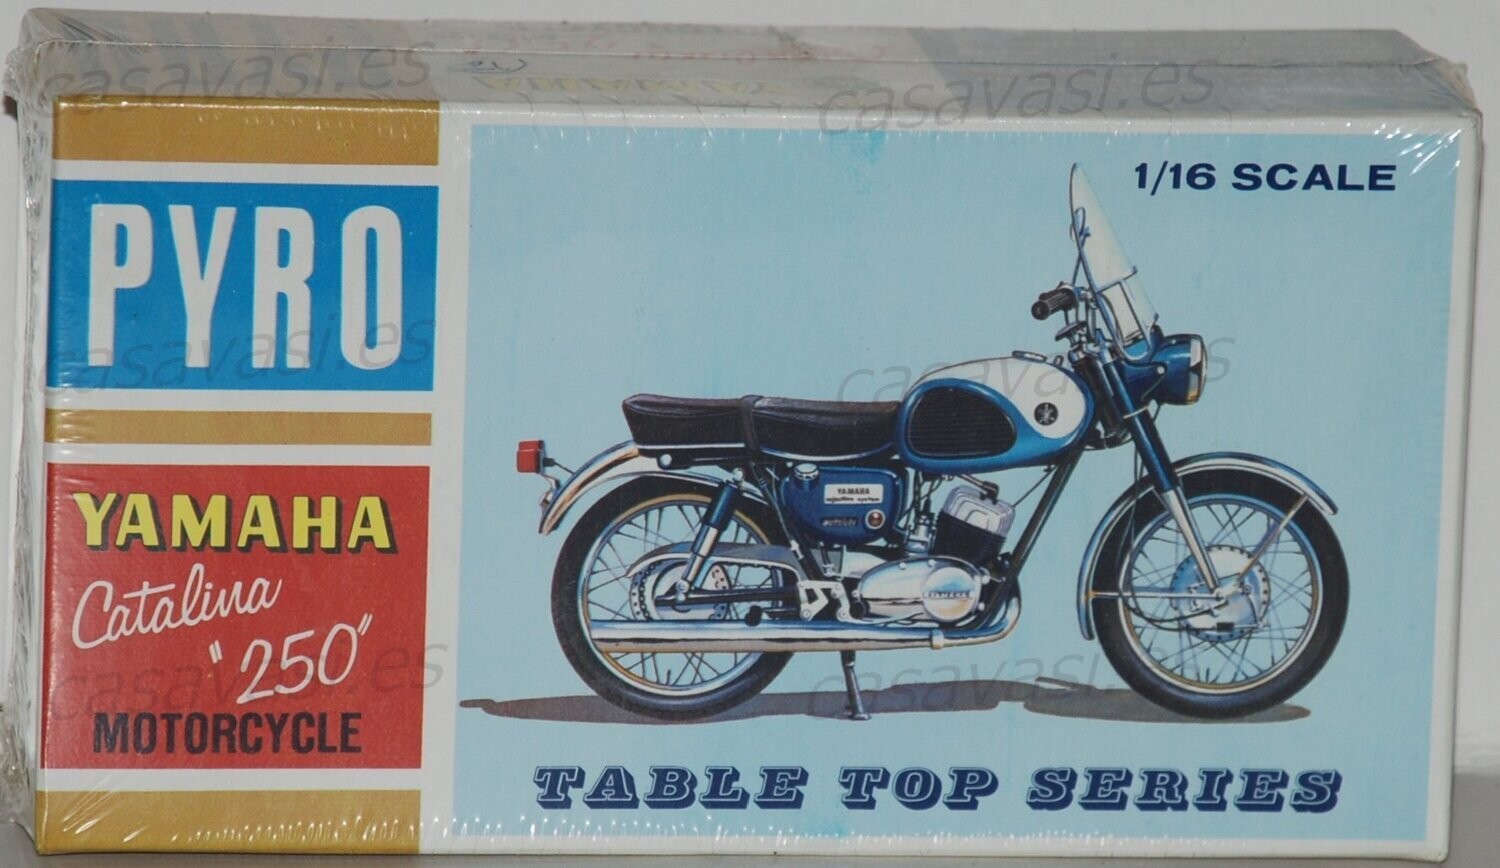 Pyro - 1966 - m152-125 - 1/16 - Nº 2 - Yamaha Catalina "250" Motorcycle
Box Sixe 20.5 x 11 cm.